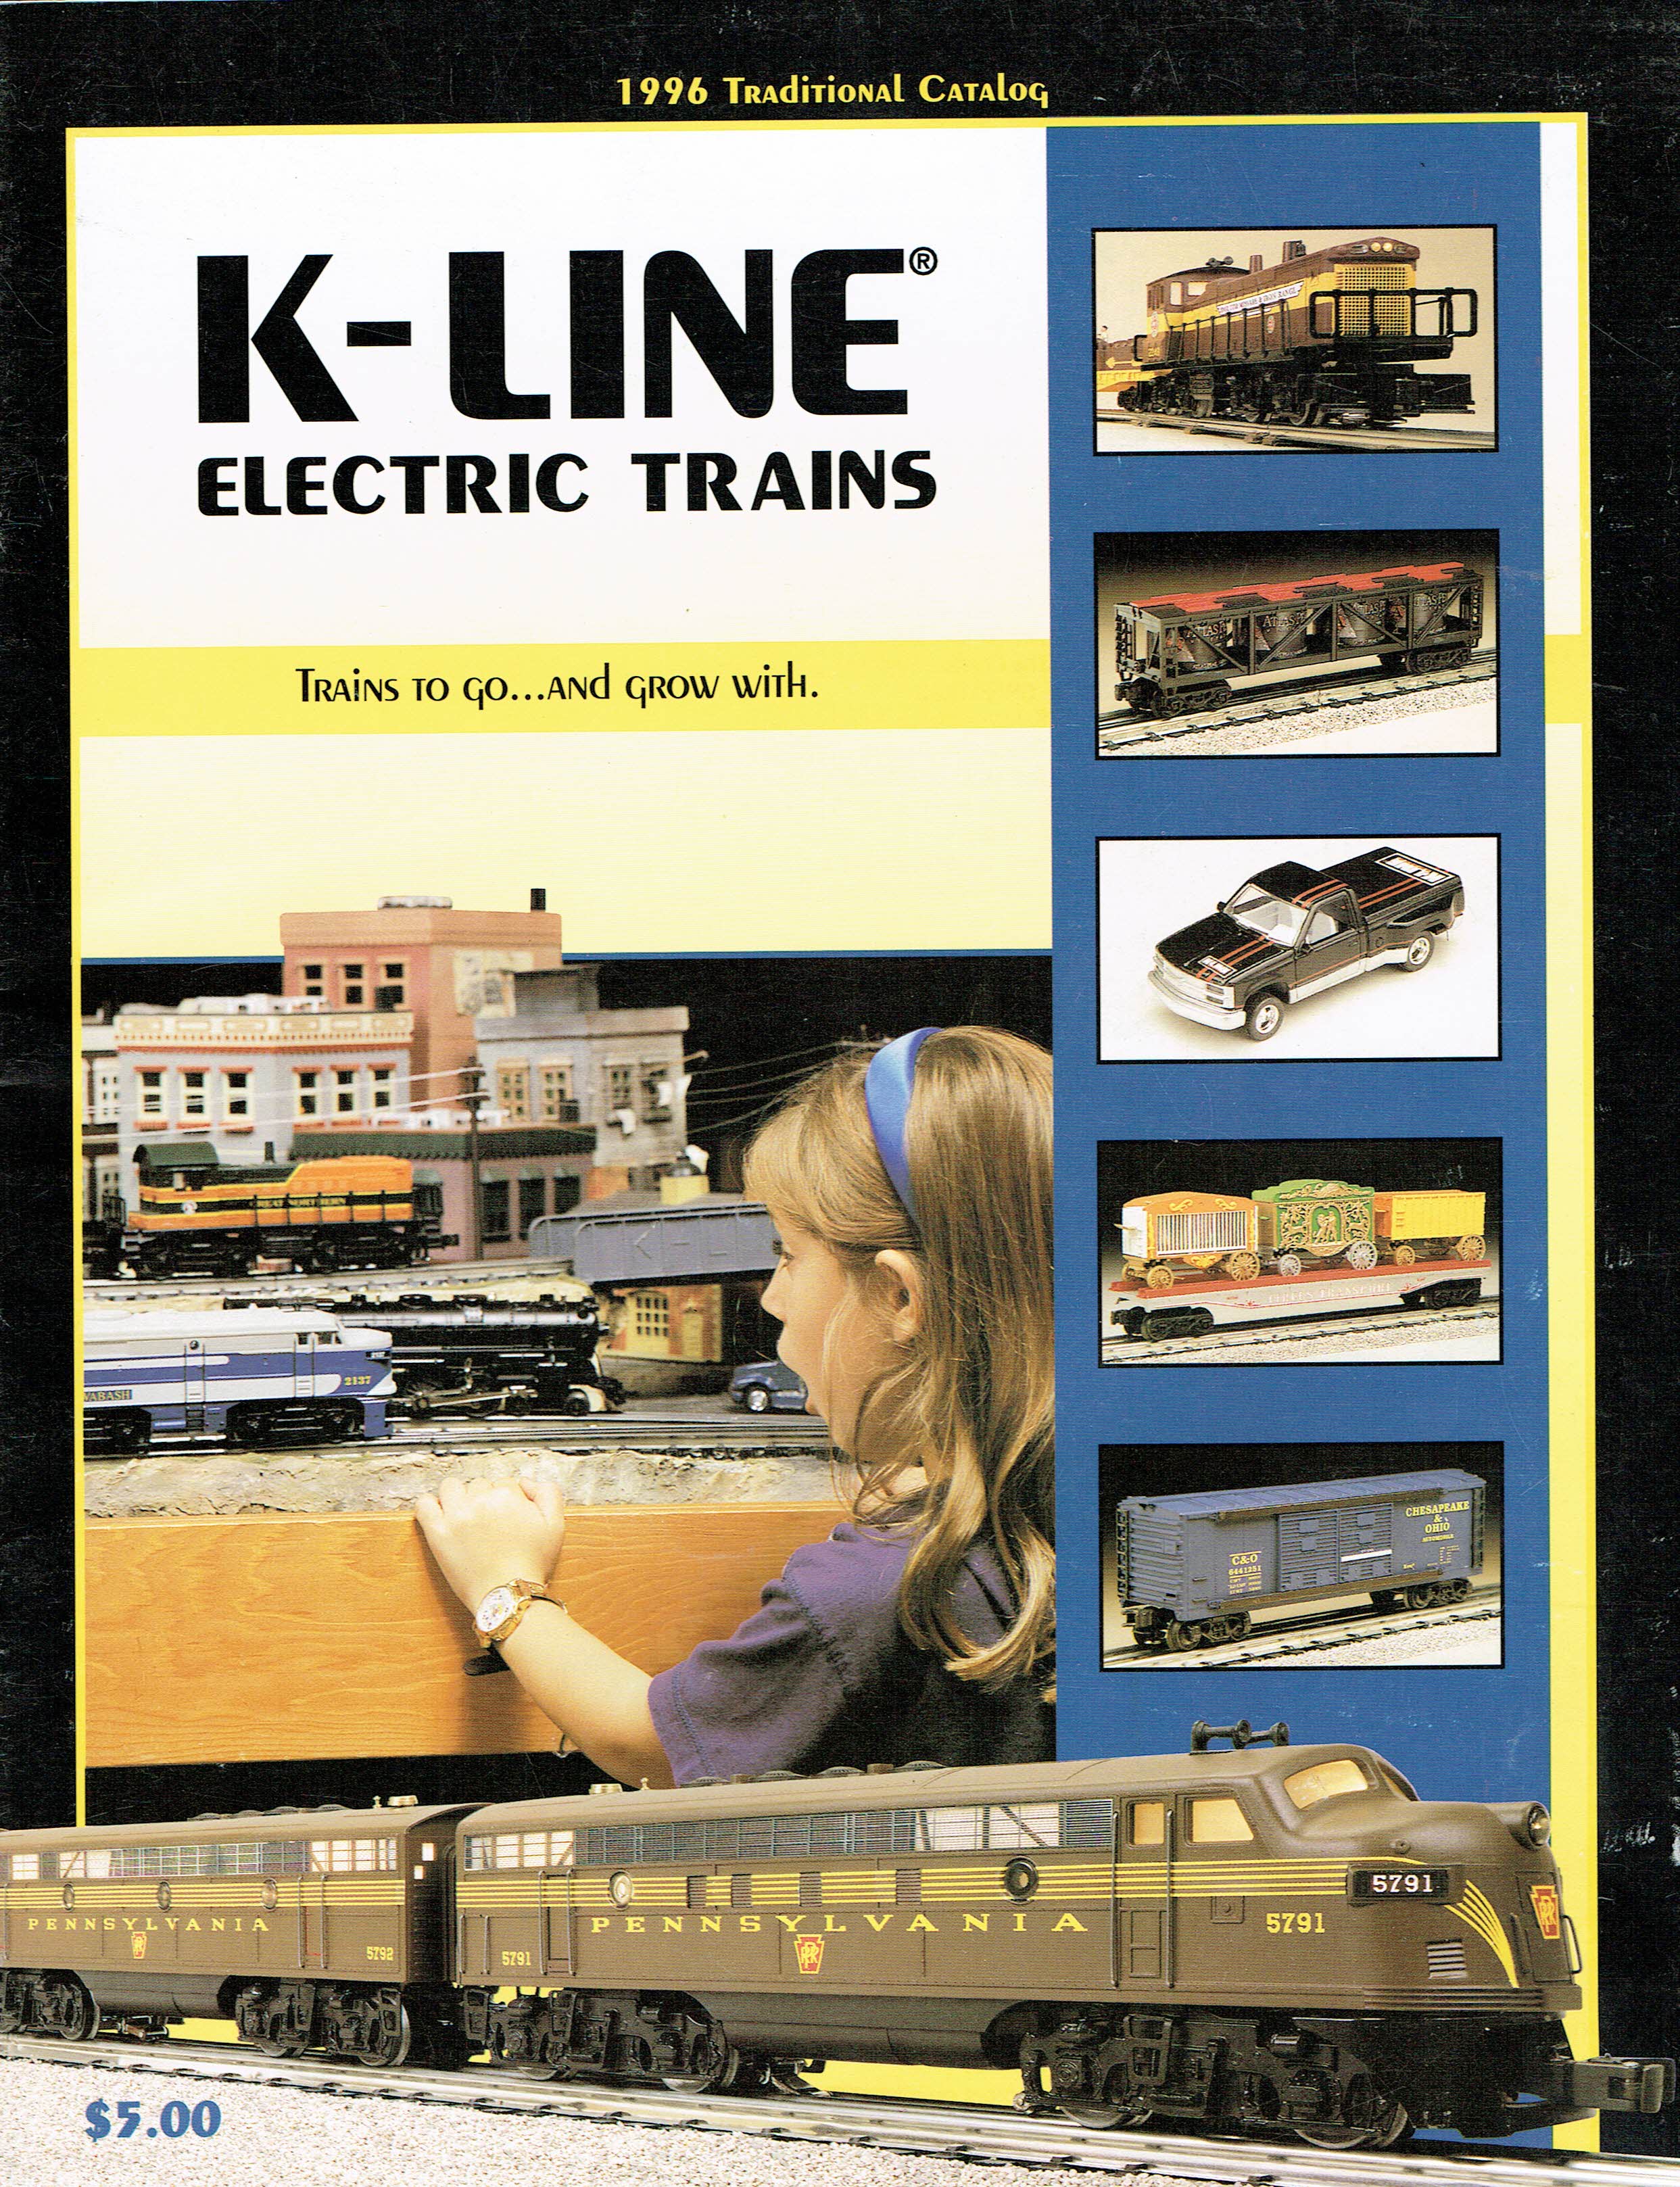 K-Line 1996 Traditional Catalog image